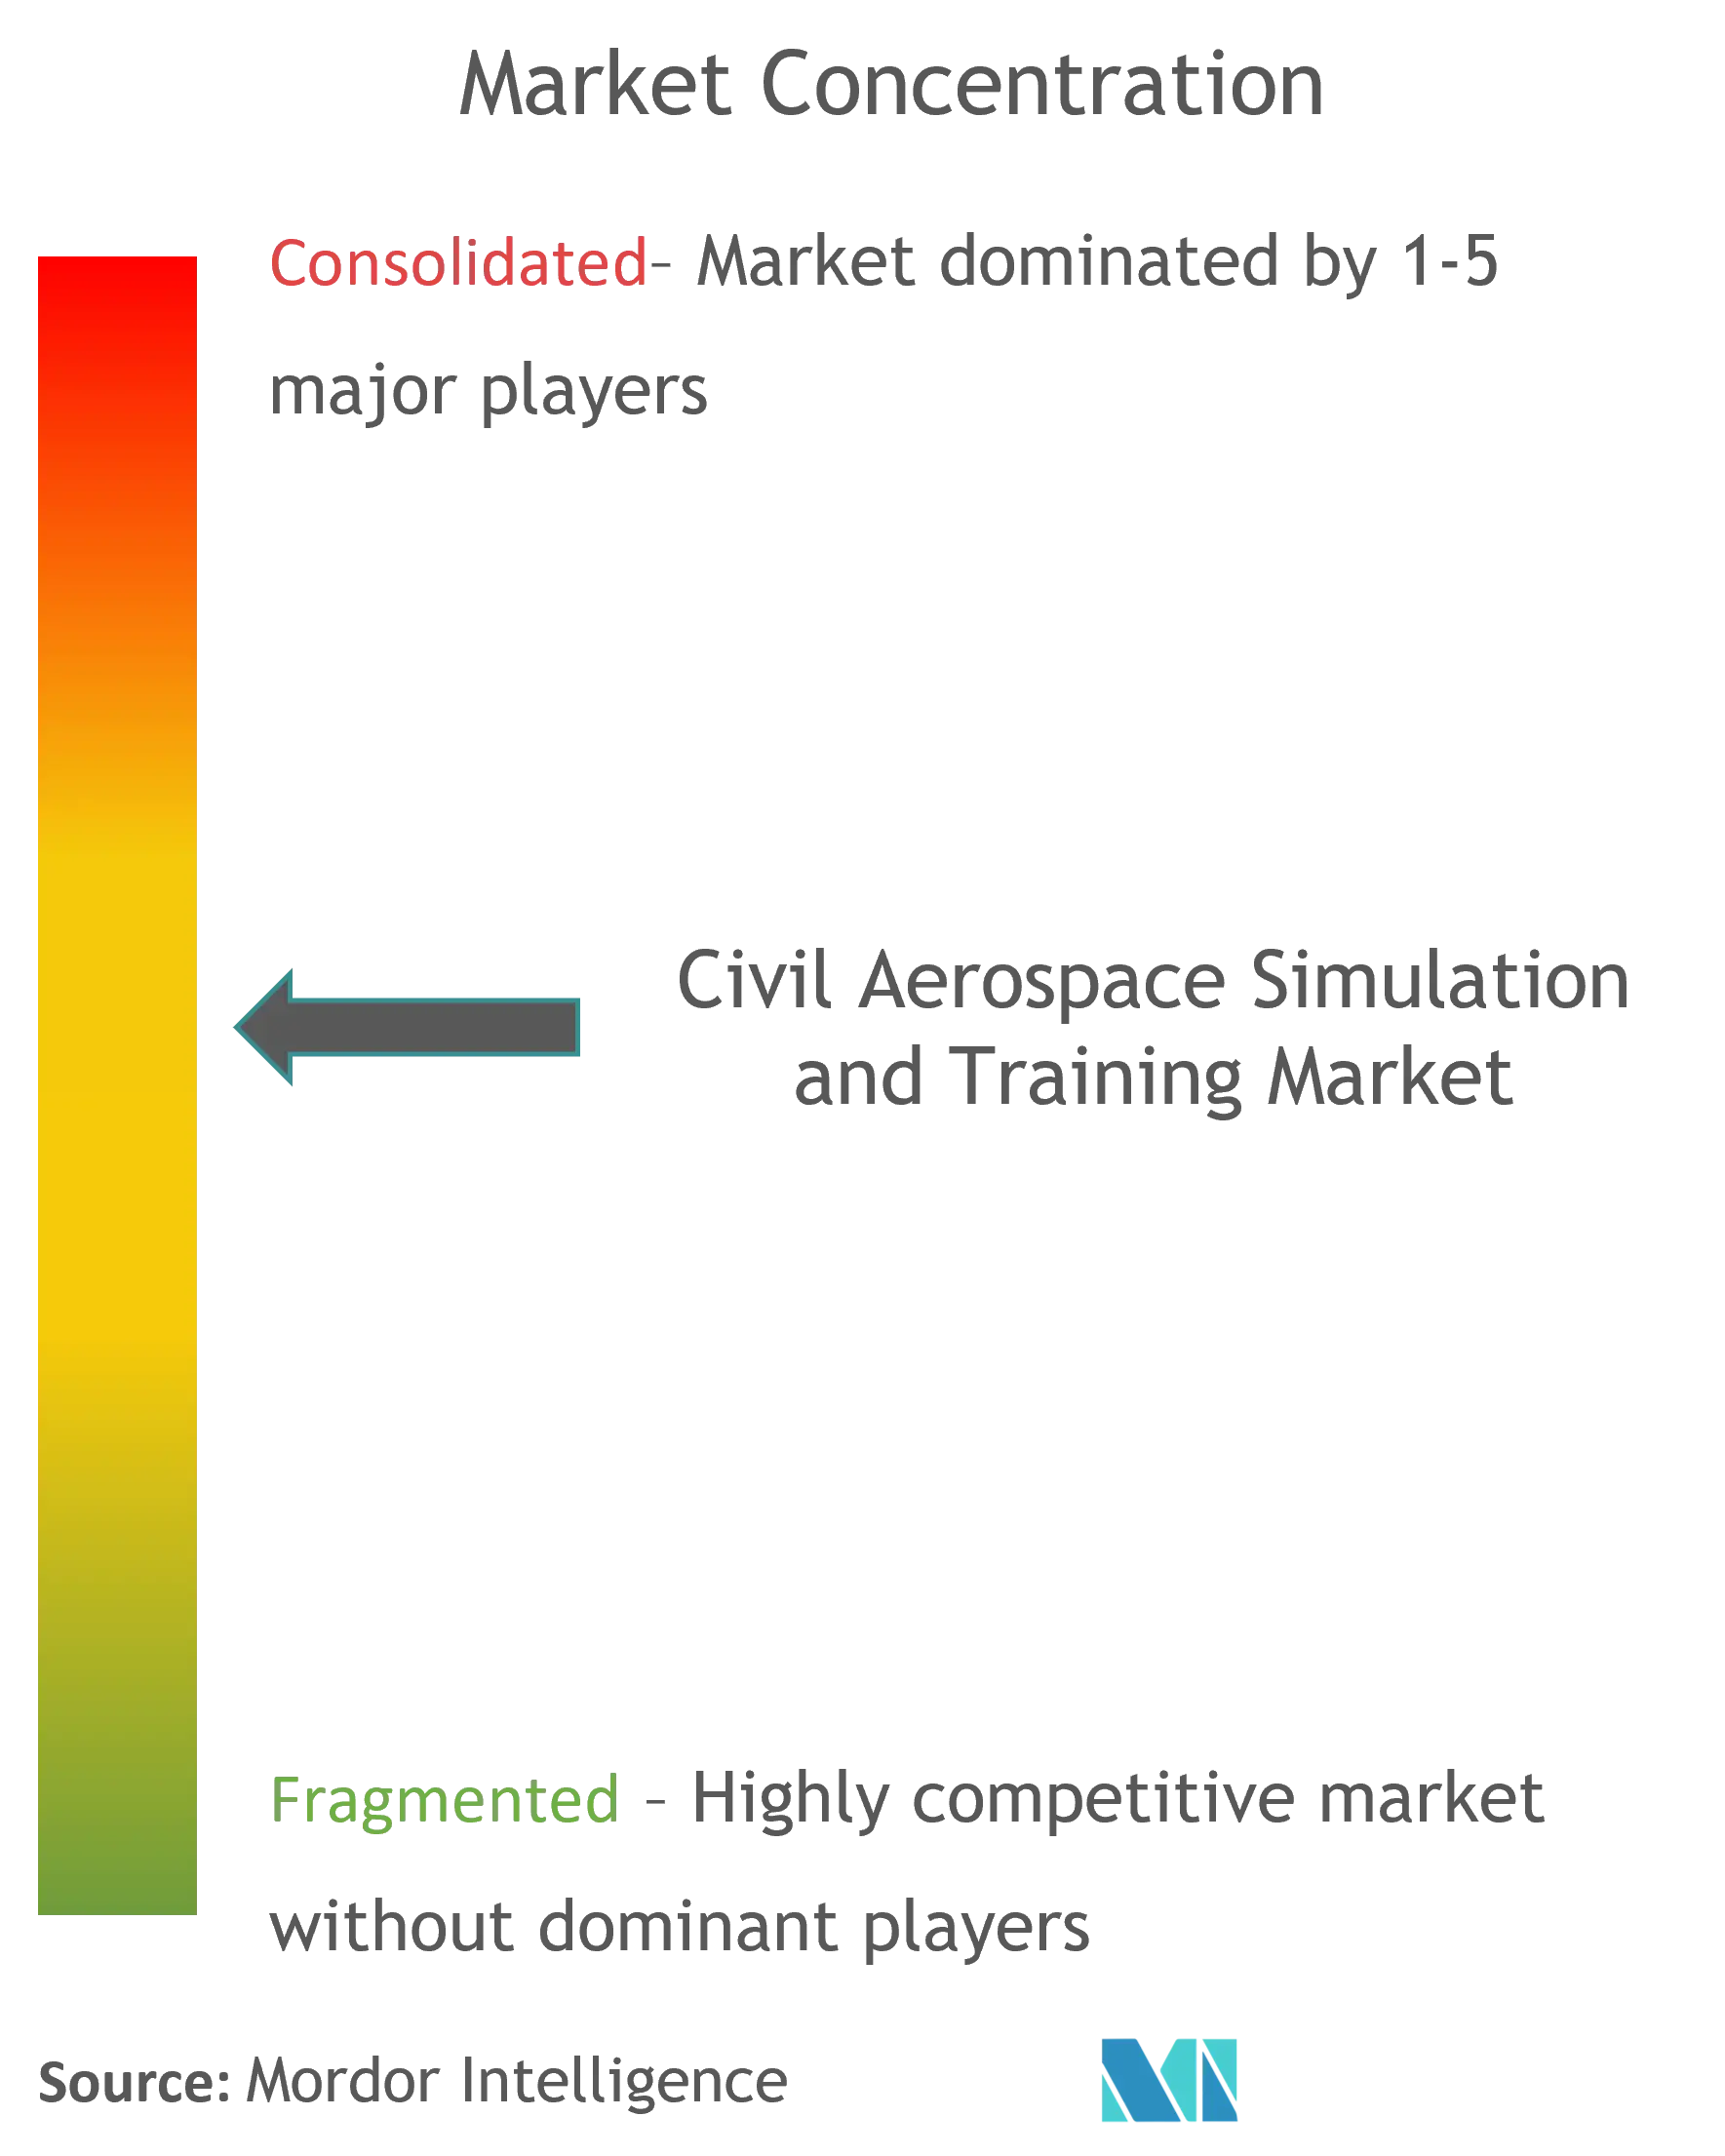 Civil Aerospace Training And Simulation Market Concentration